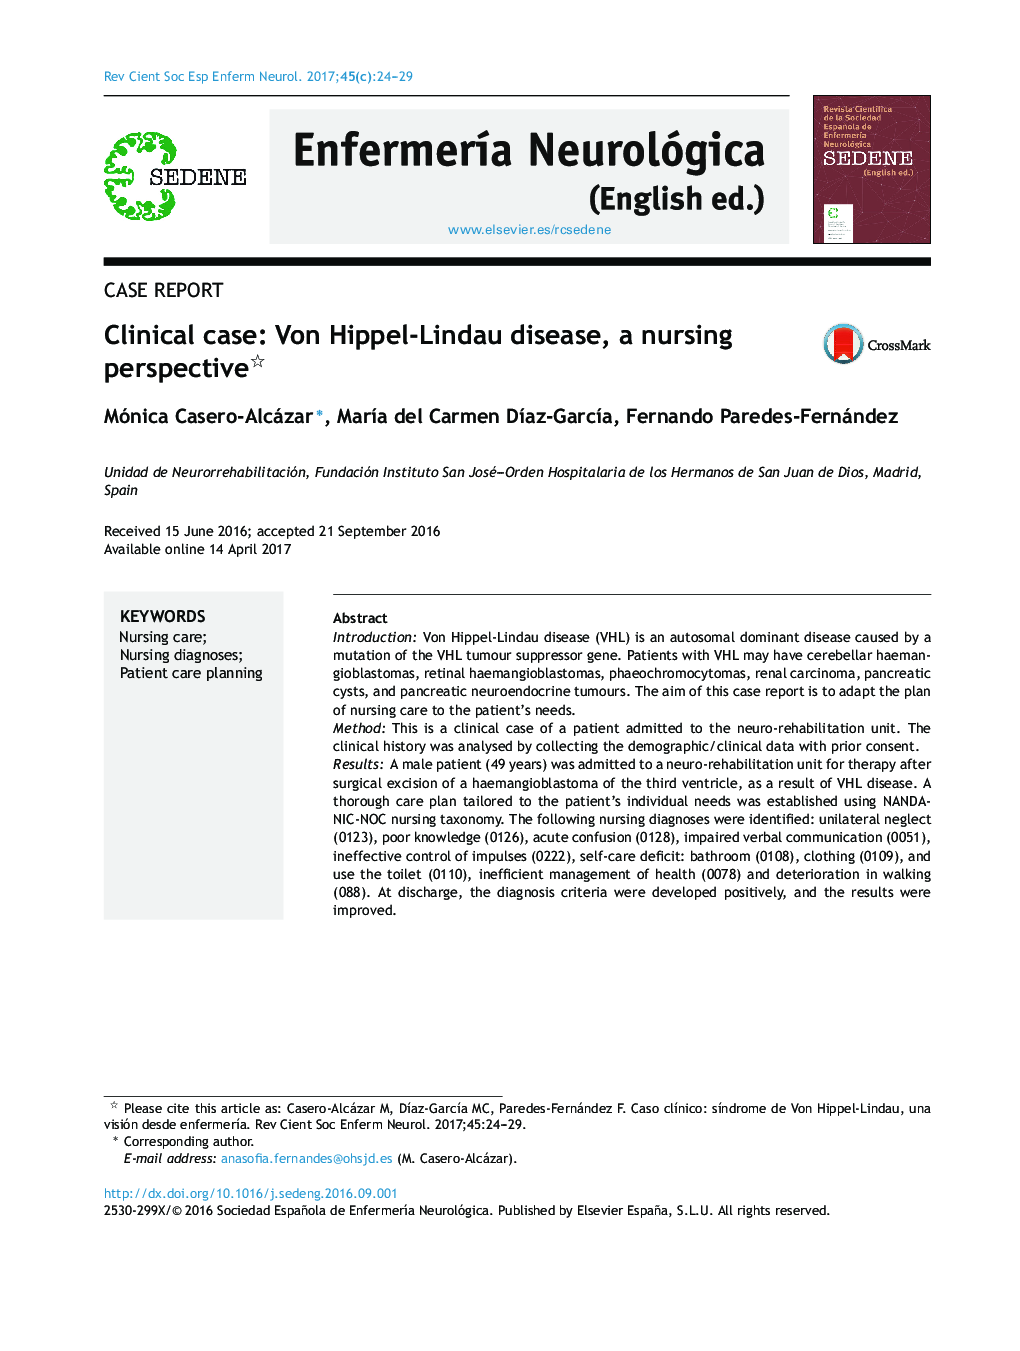 مورد بالینی: بیماری فون هیپال لینادو، چشم انداز پرستاری 